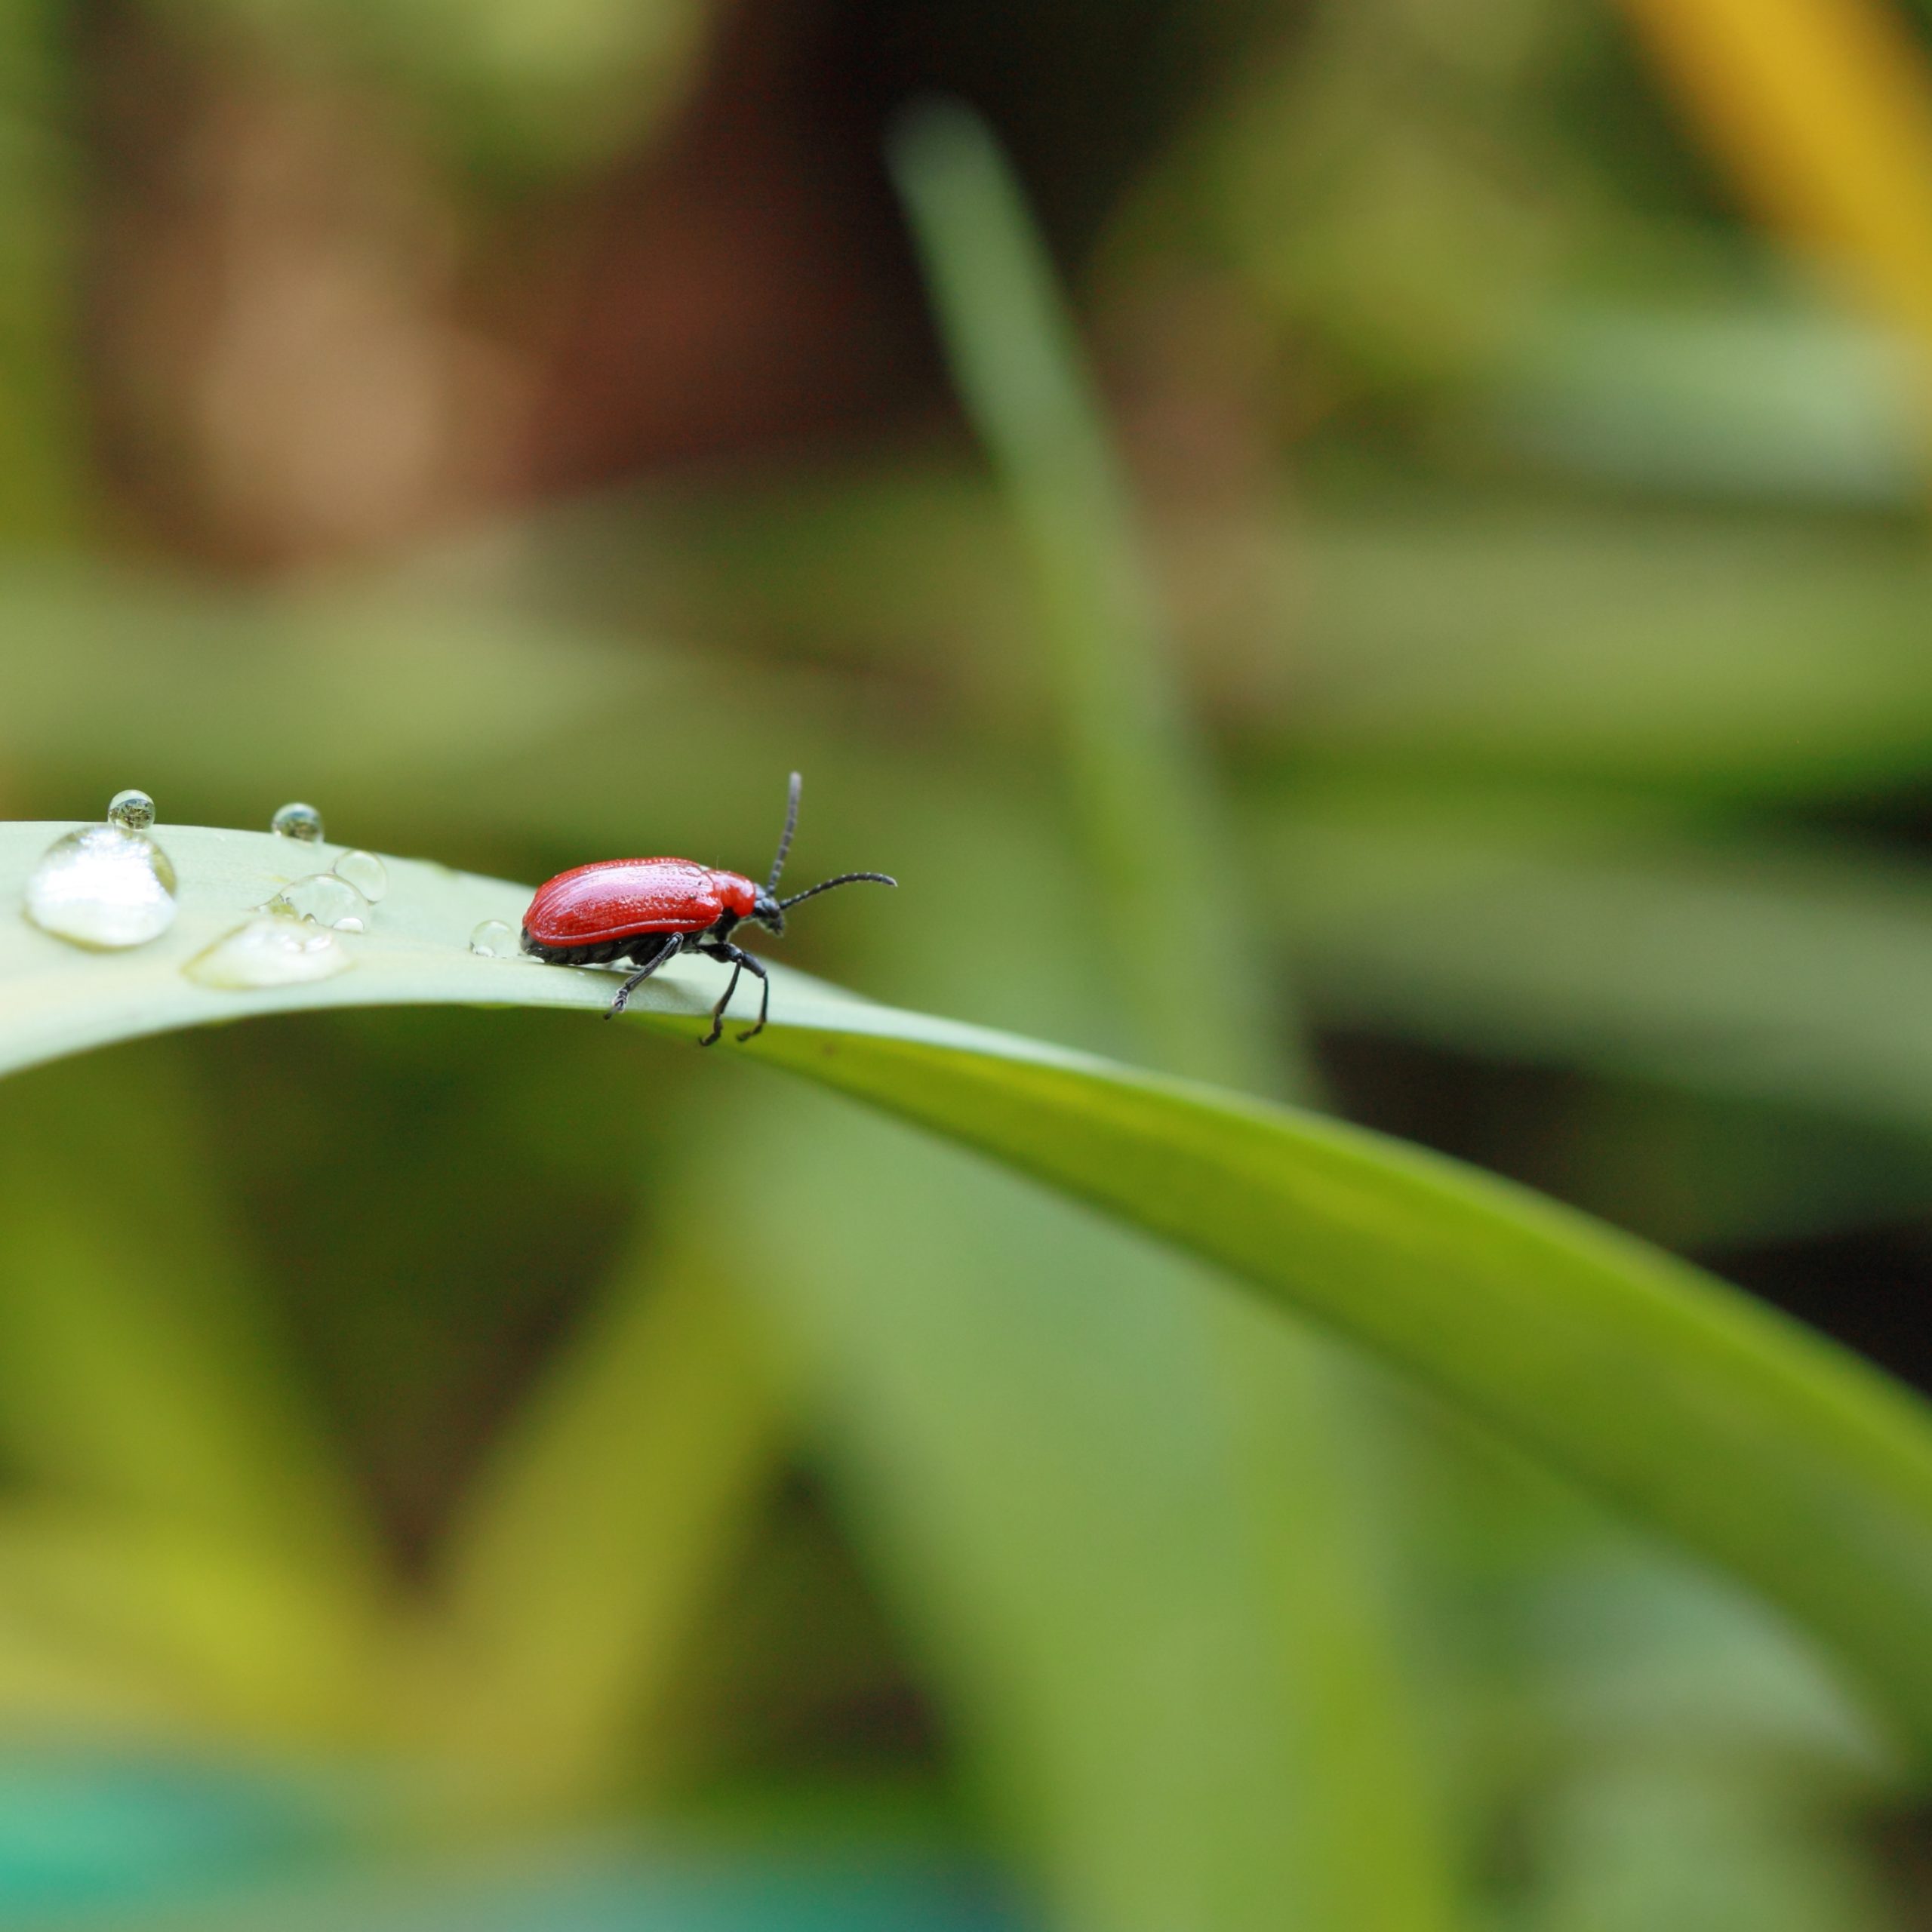 A close-up of a bug on a grass blade.